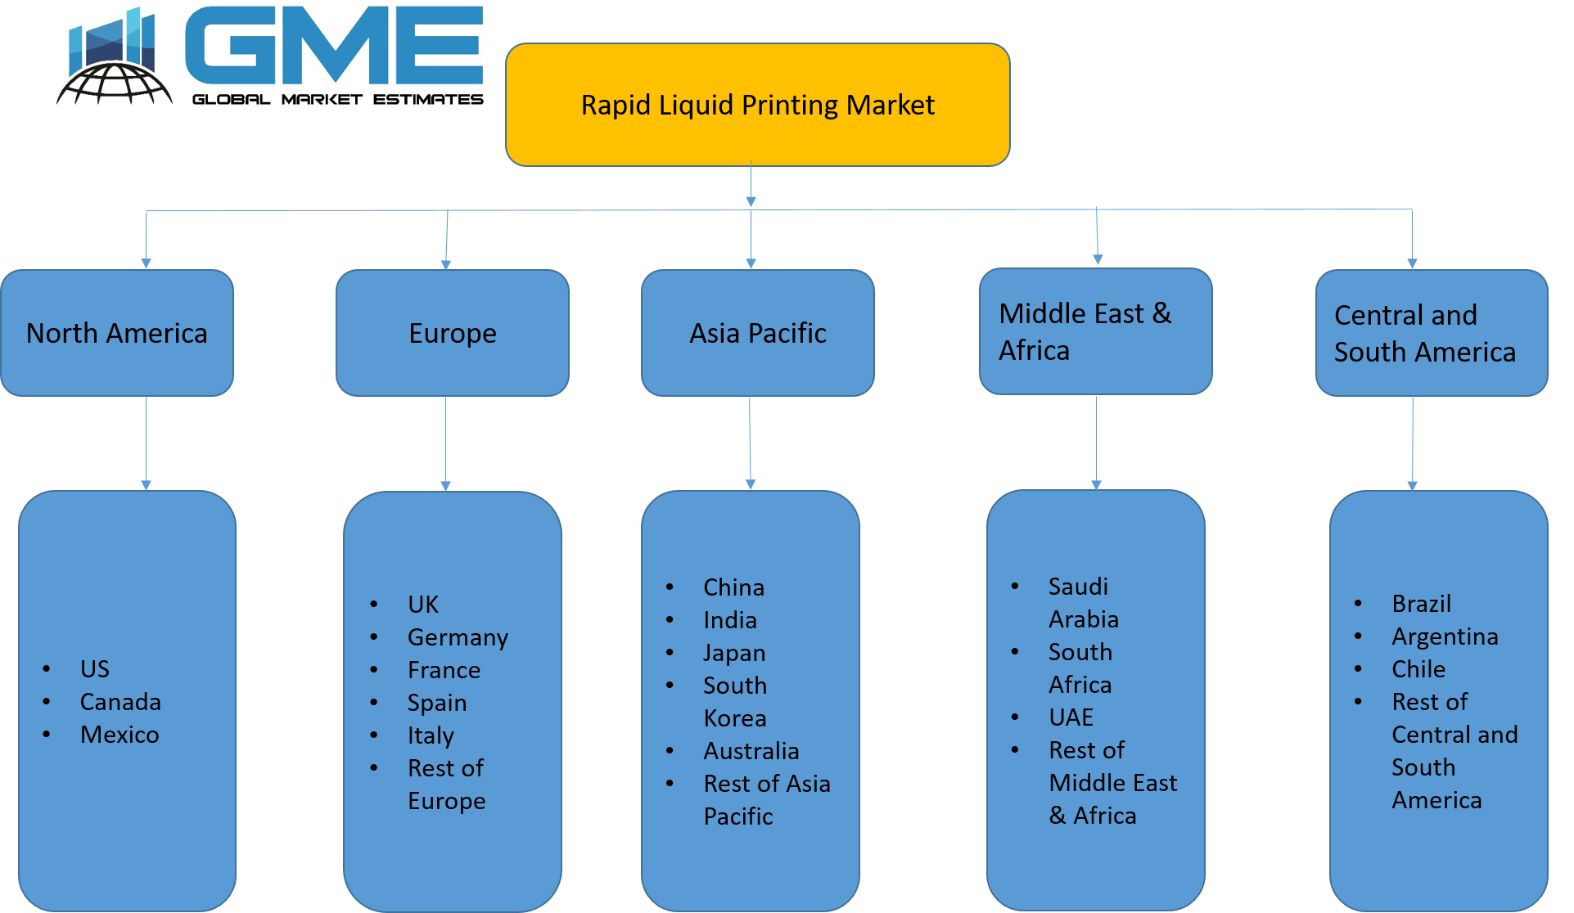 Rapid Liquid Printing Market - Regional Analysis